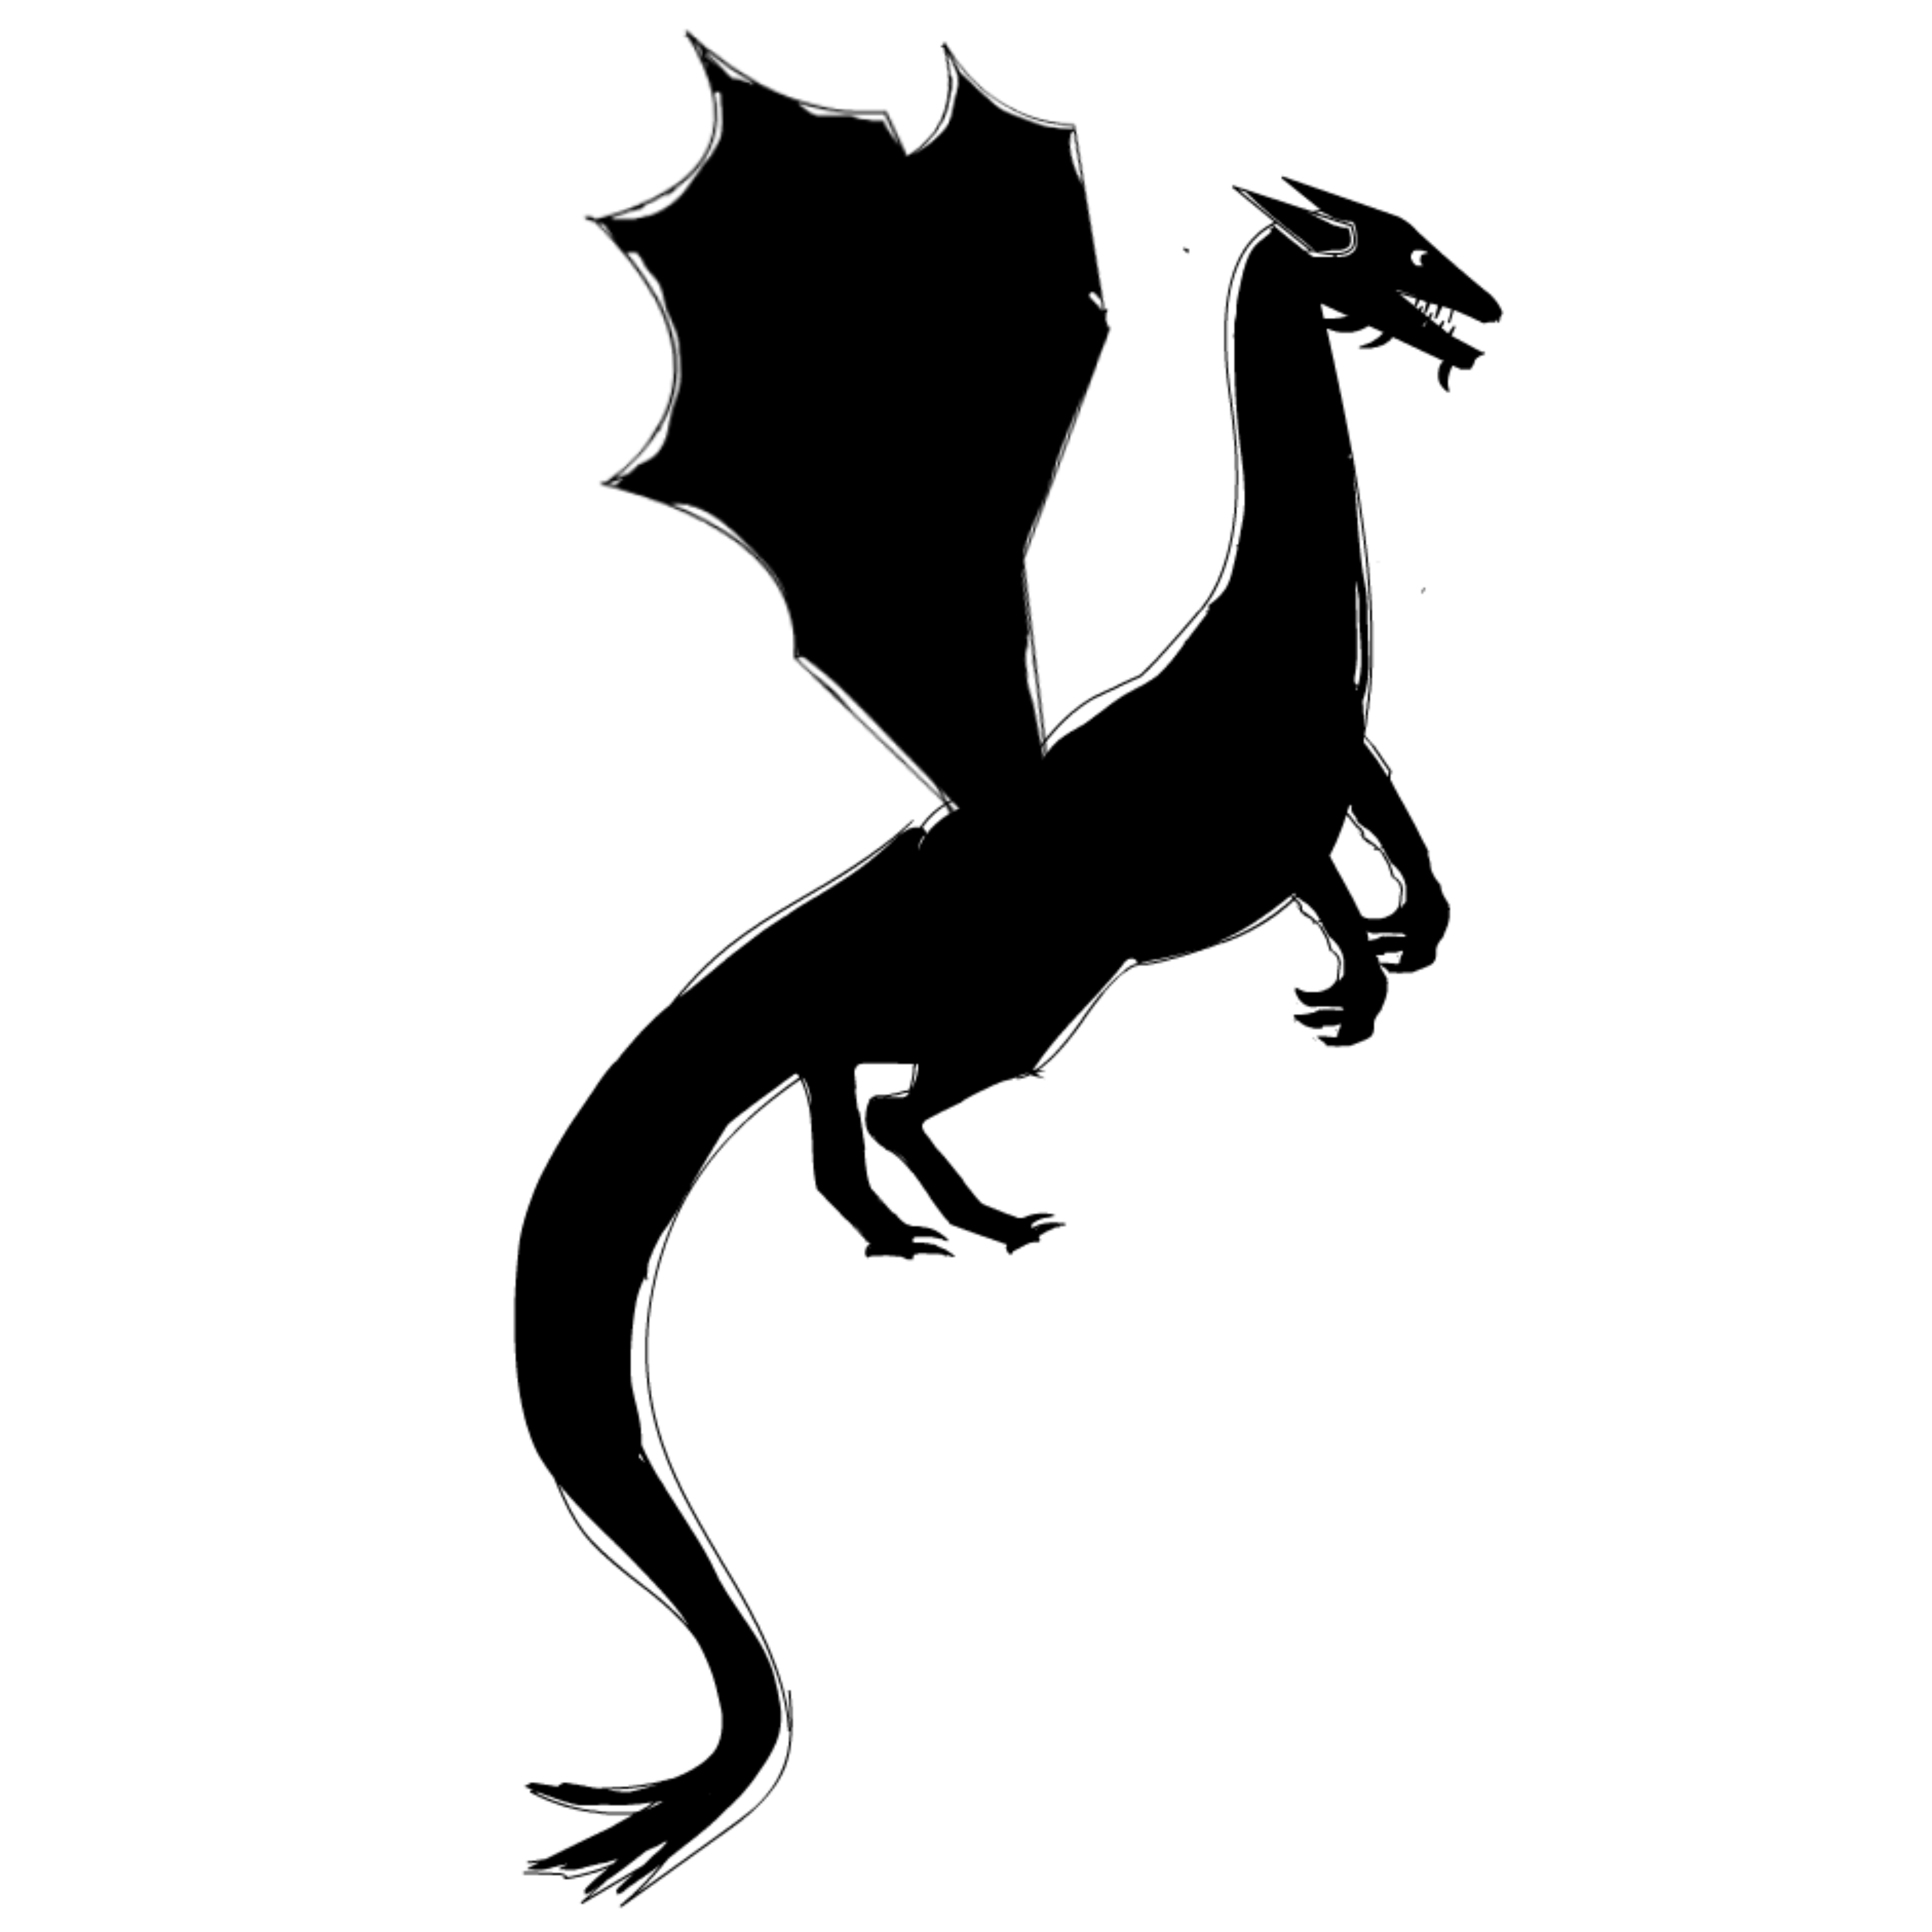 The Dragon, a flying reptilian animal.